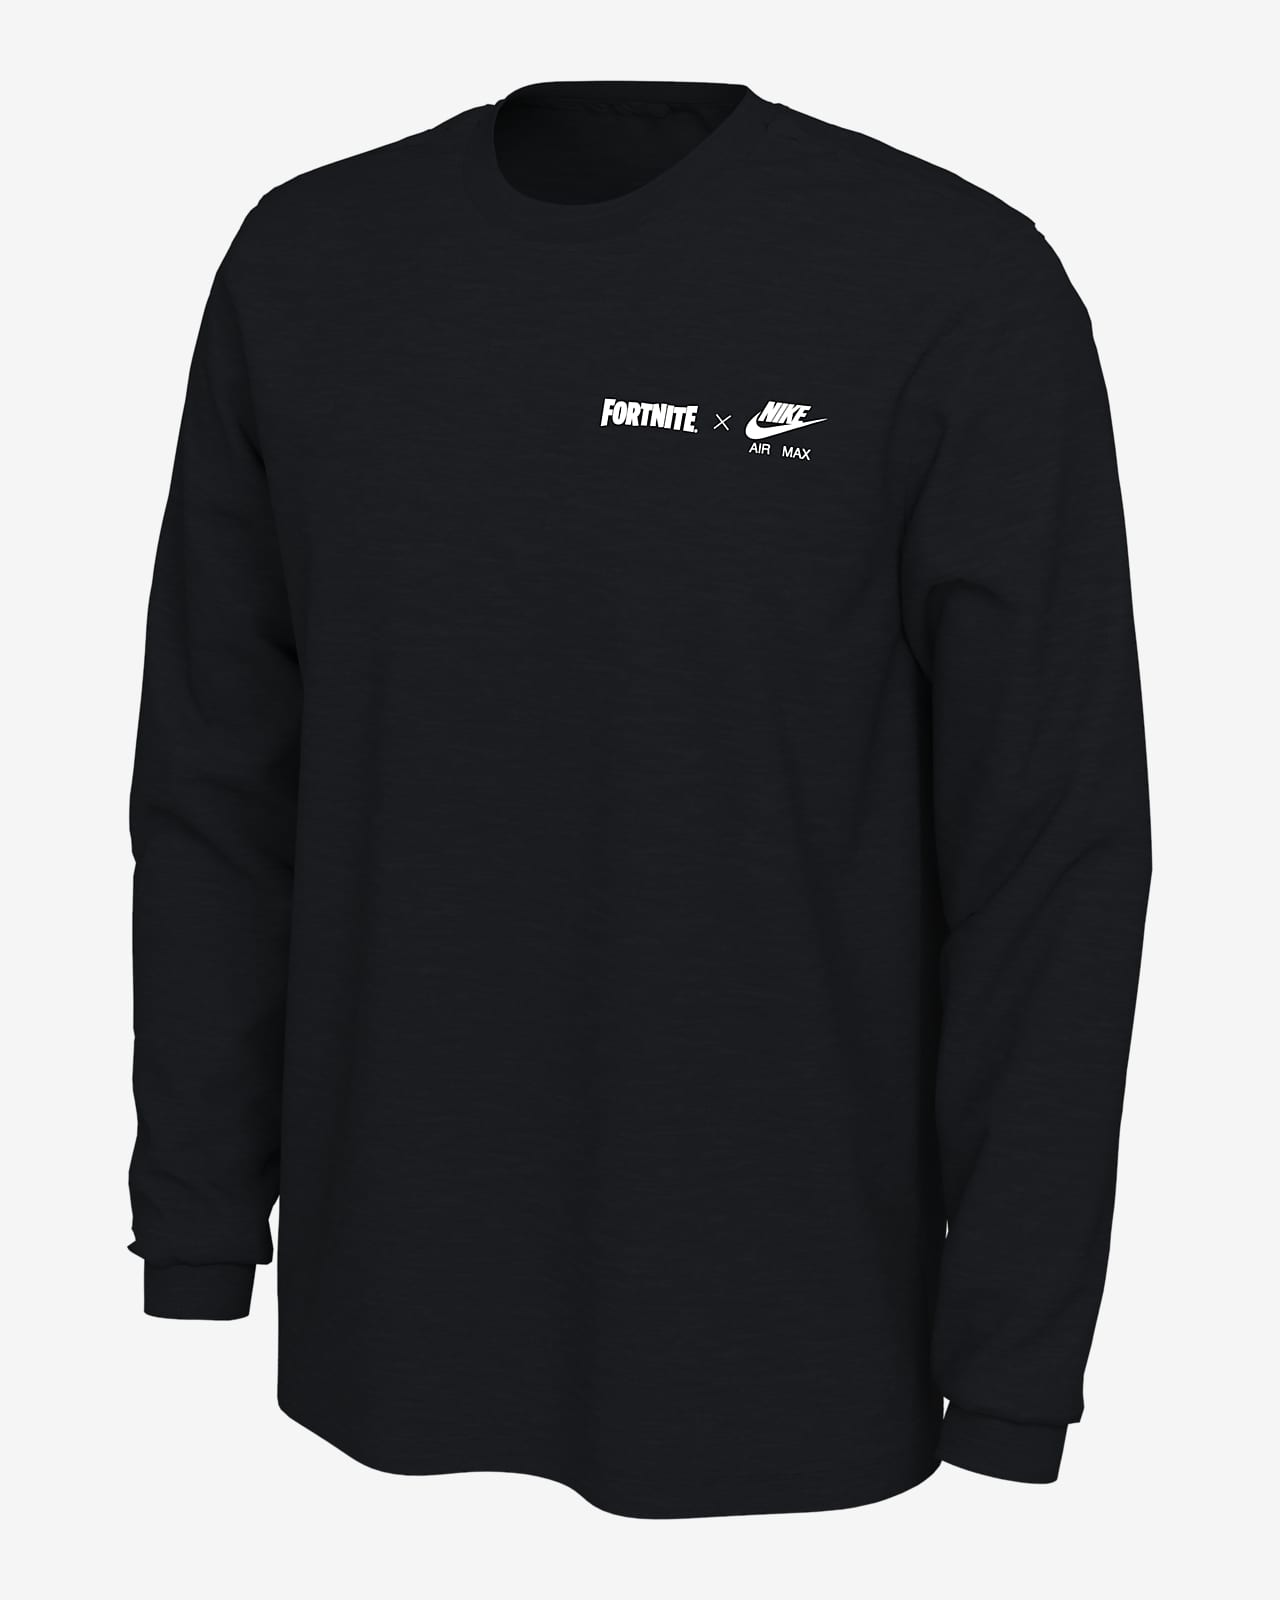 Persona especial Teoría establecida Experimentar Fortnite™ x Nike Air Max Men's Nike Long-Sleeve T-Shirt. Nike.com